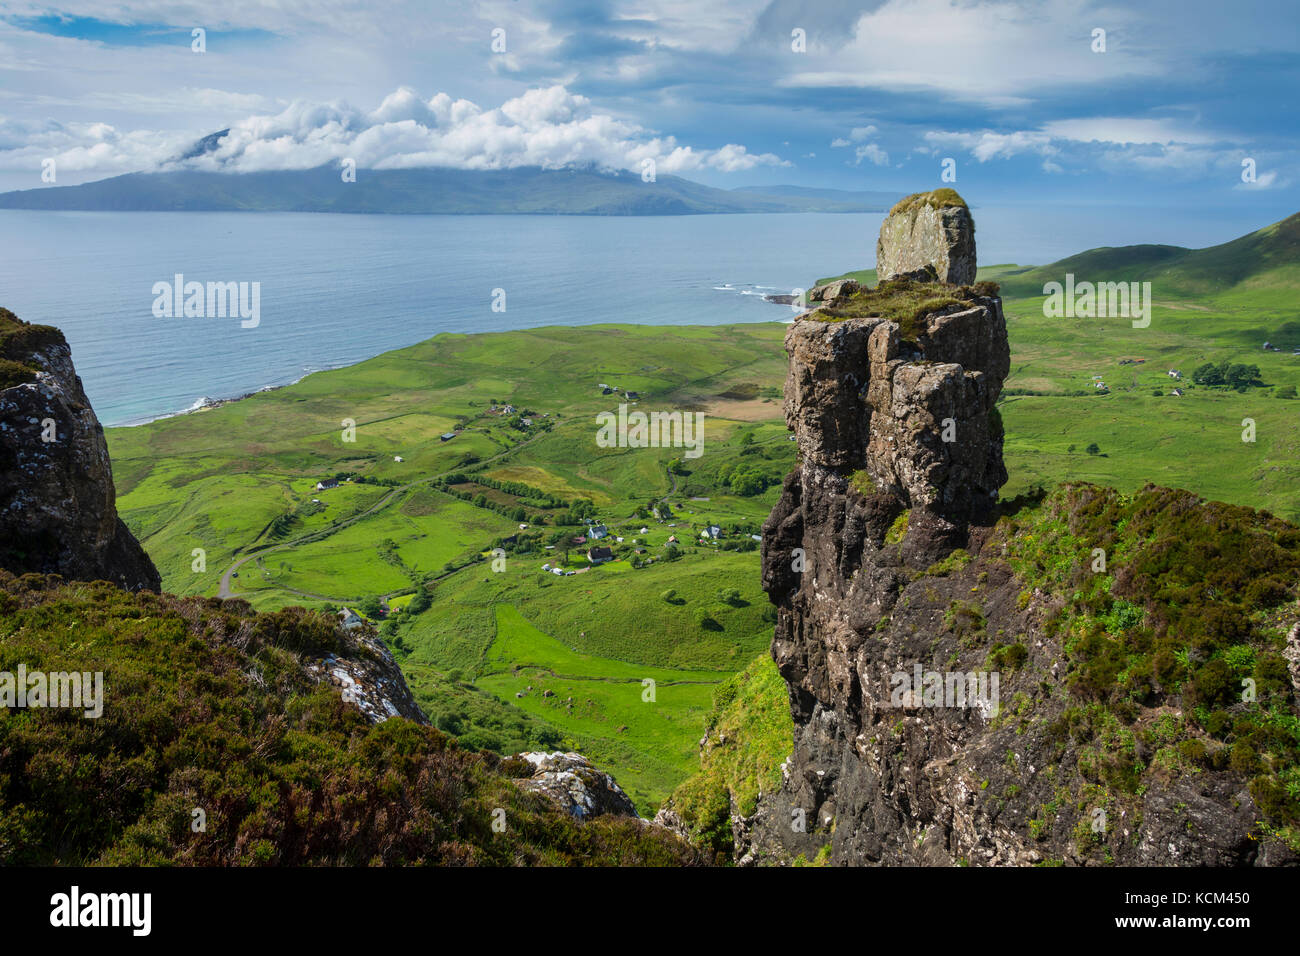 The Isle of Rum from the pinnacle of Bidean an Tighearna (God's Finger) on the western edge of the Beinn Bhuidhe plateau, Isle of Eigg, Scotland, UK Stock Photo